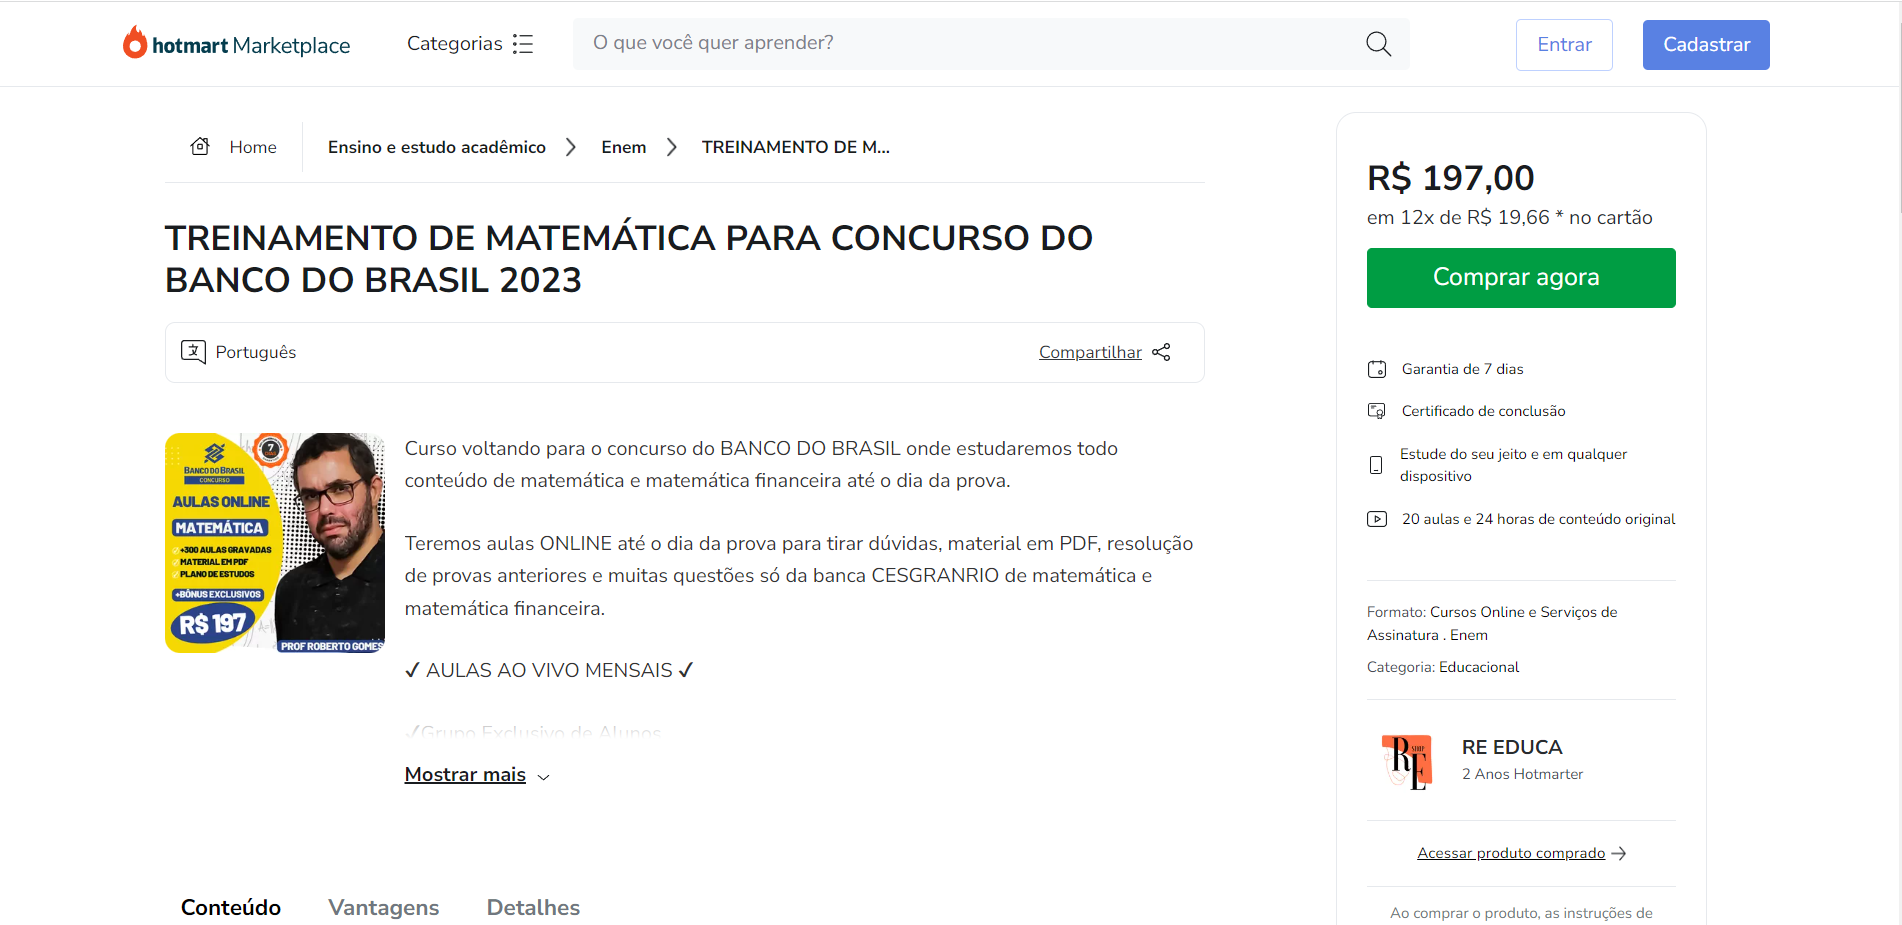 Treinamento de Matemática Para Concurso do Banco do Brasil 2023 - RE EDUCA